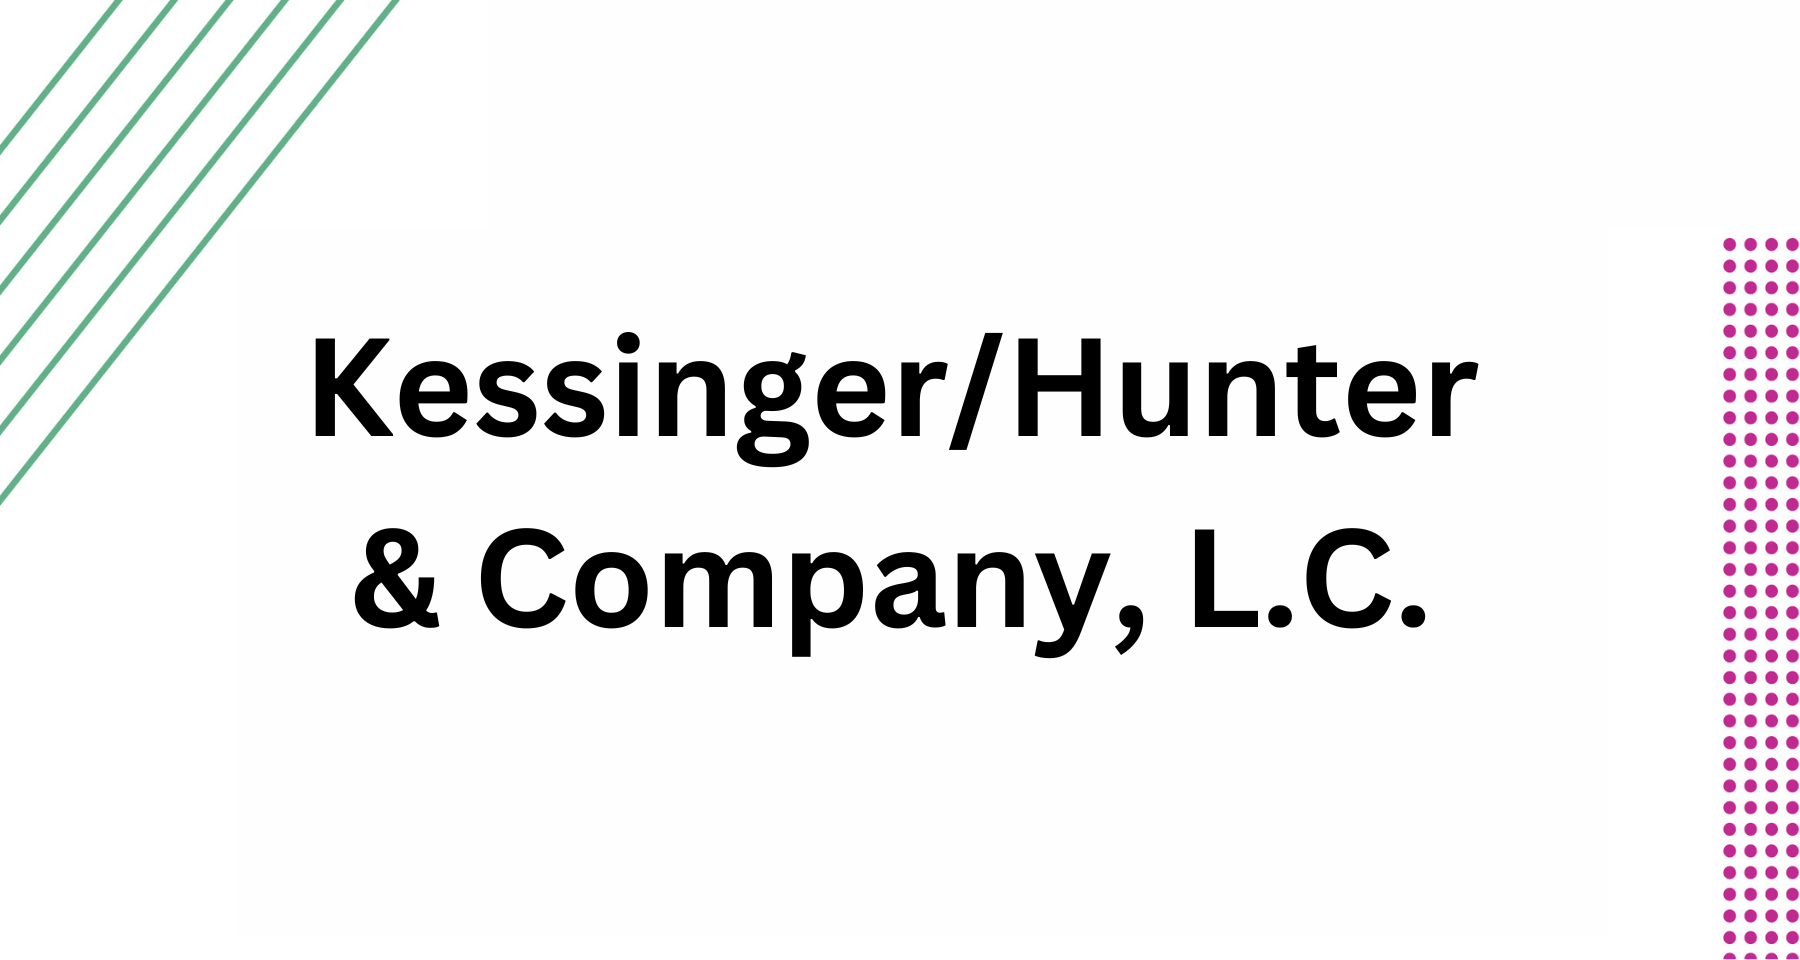 Kessinger/Hunter & Company